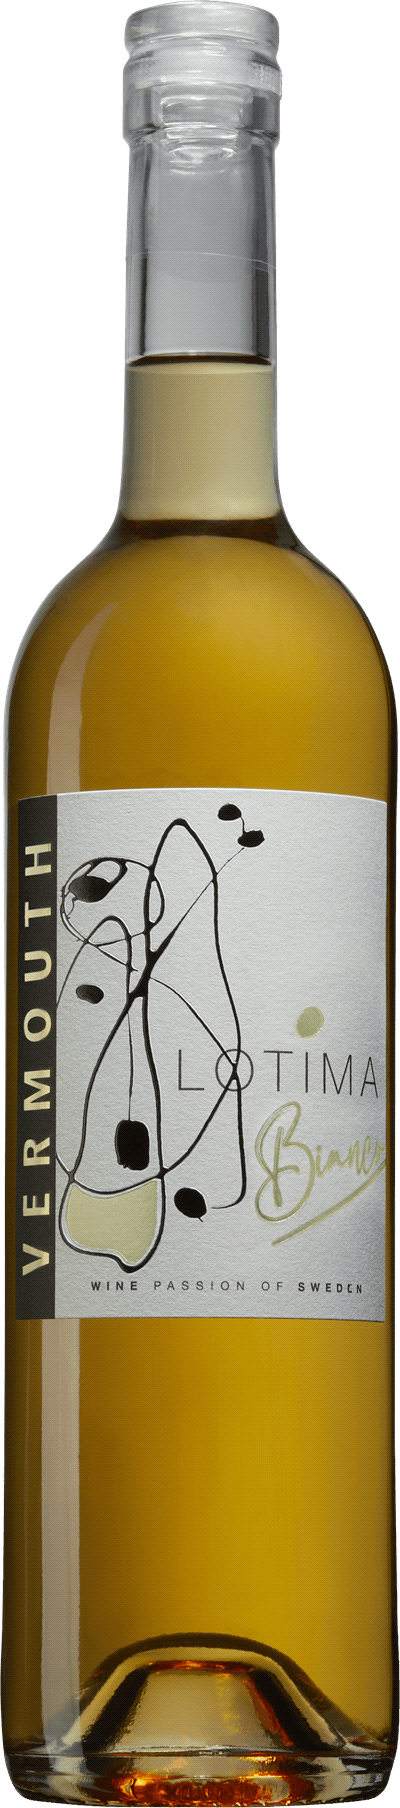 Lotima Vermouth Bianco